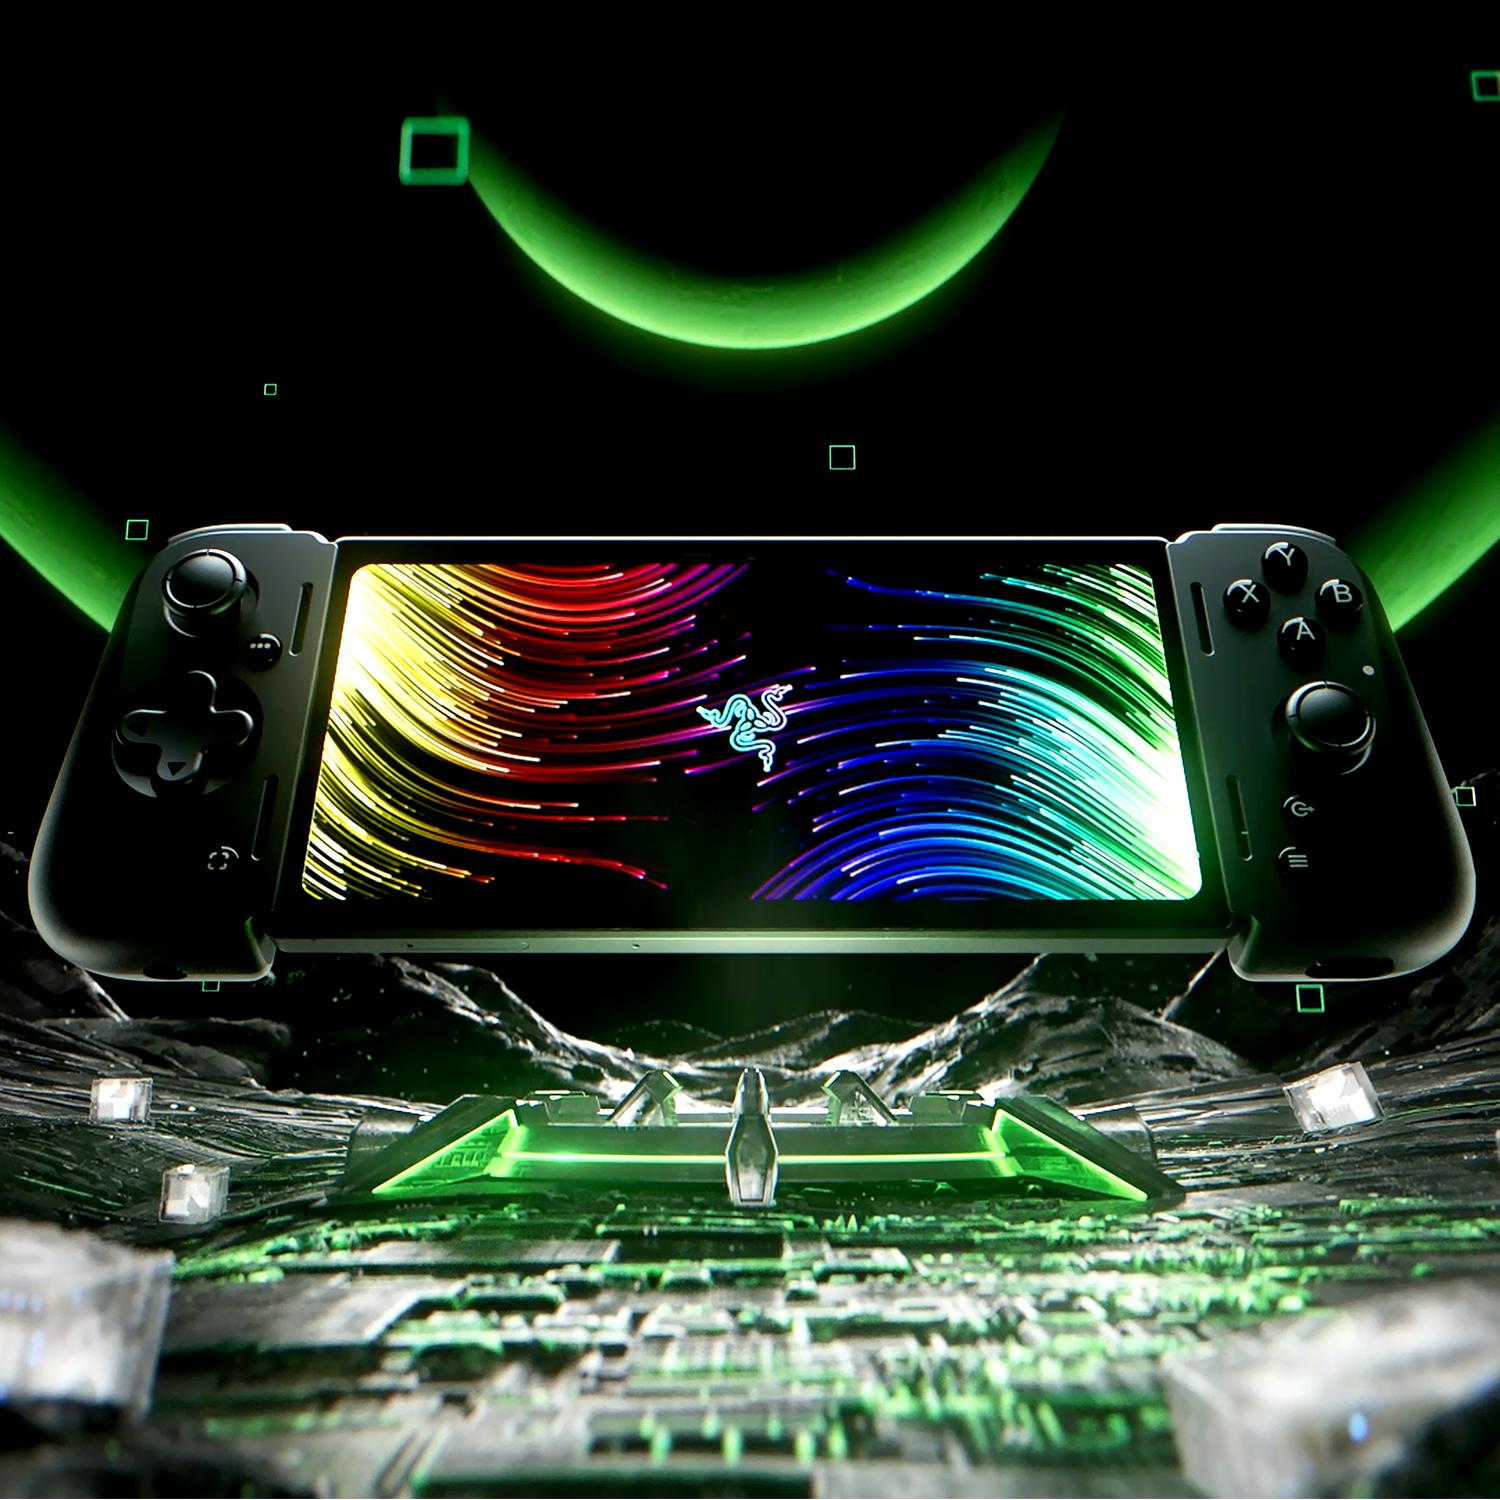 Razer Edge 5G Gaming Handheld for Android - Black (Certified Refurbished)